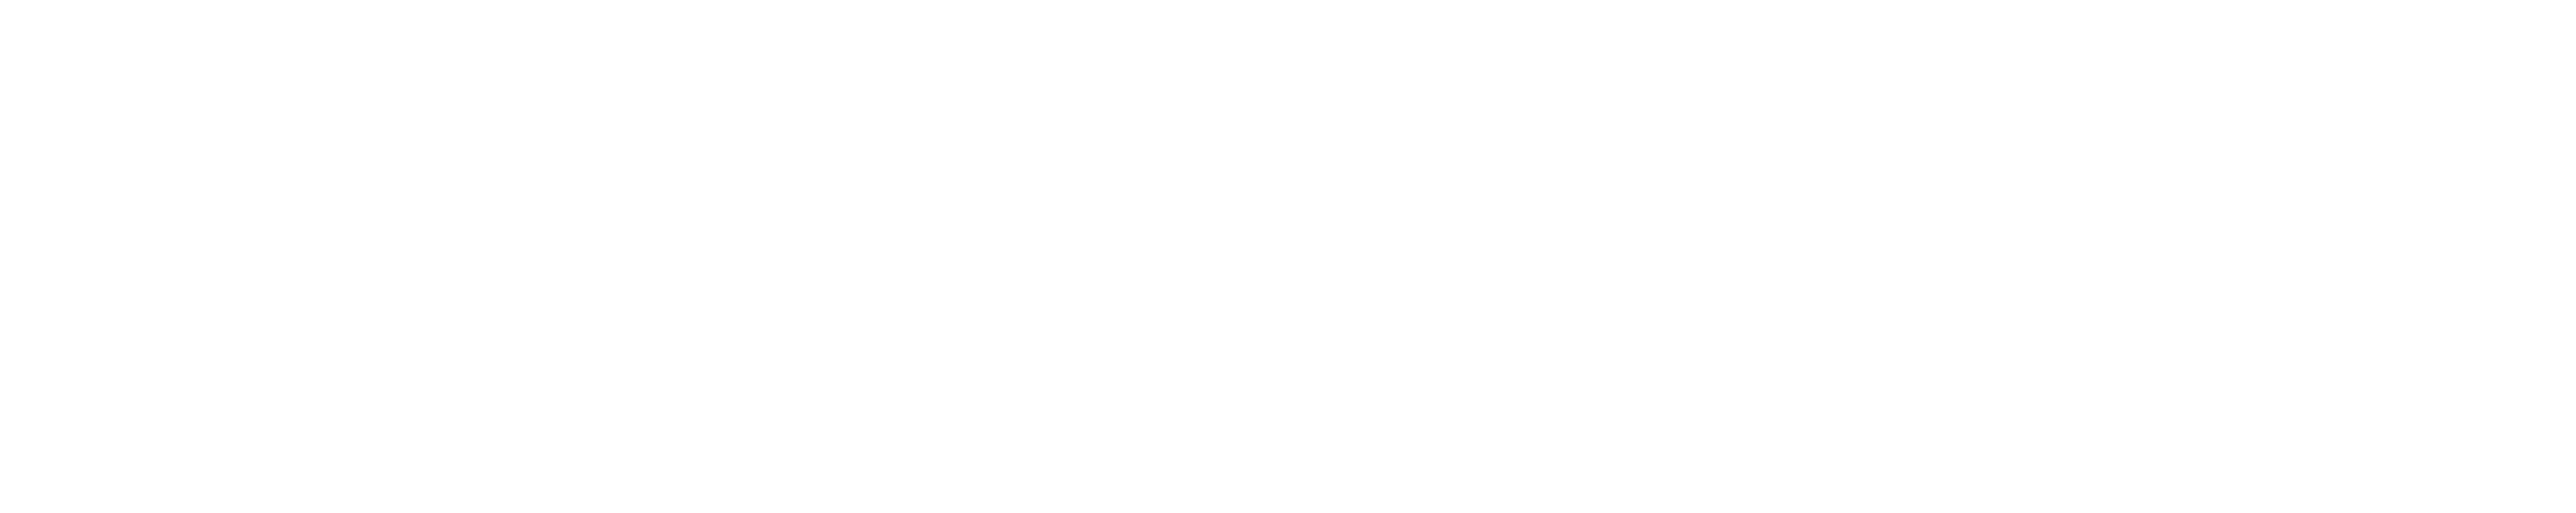 Flourish Goods Store